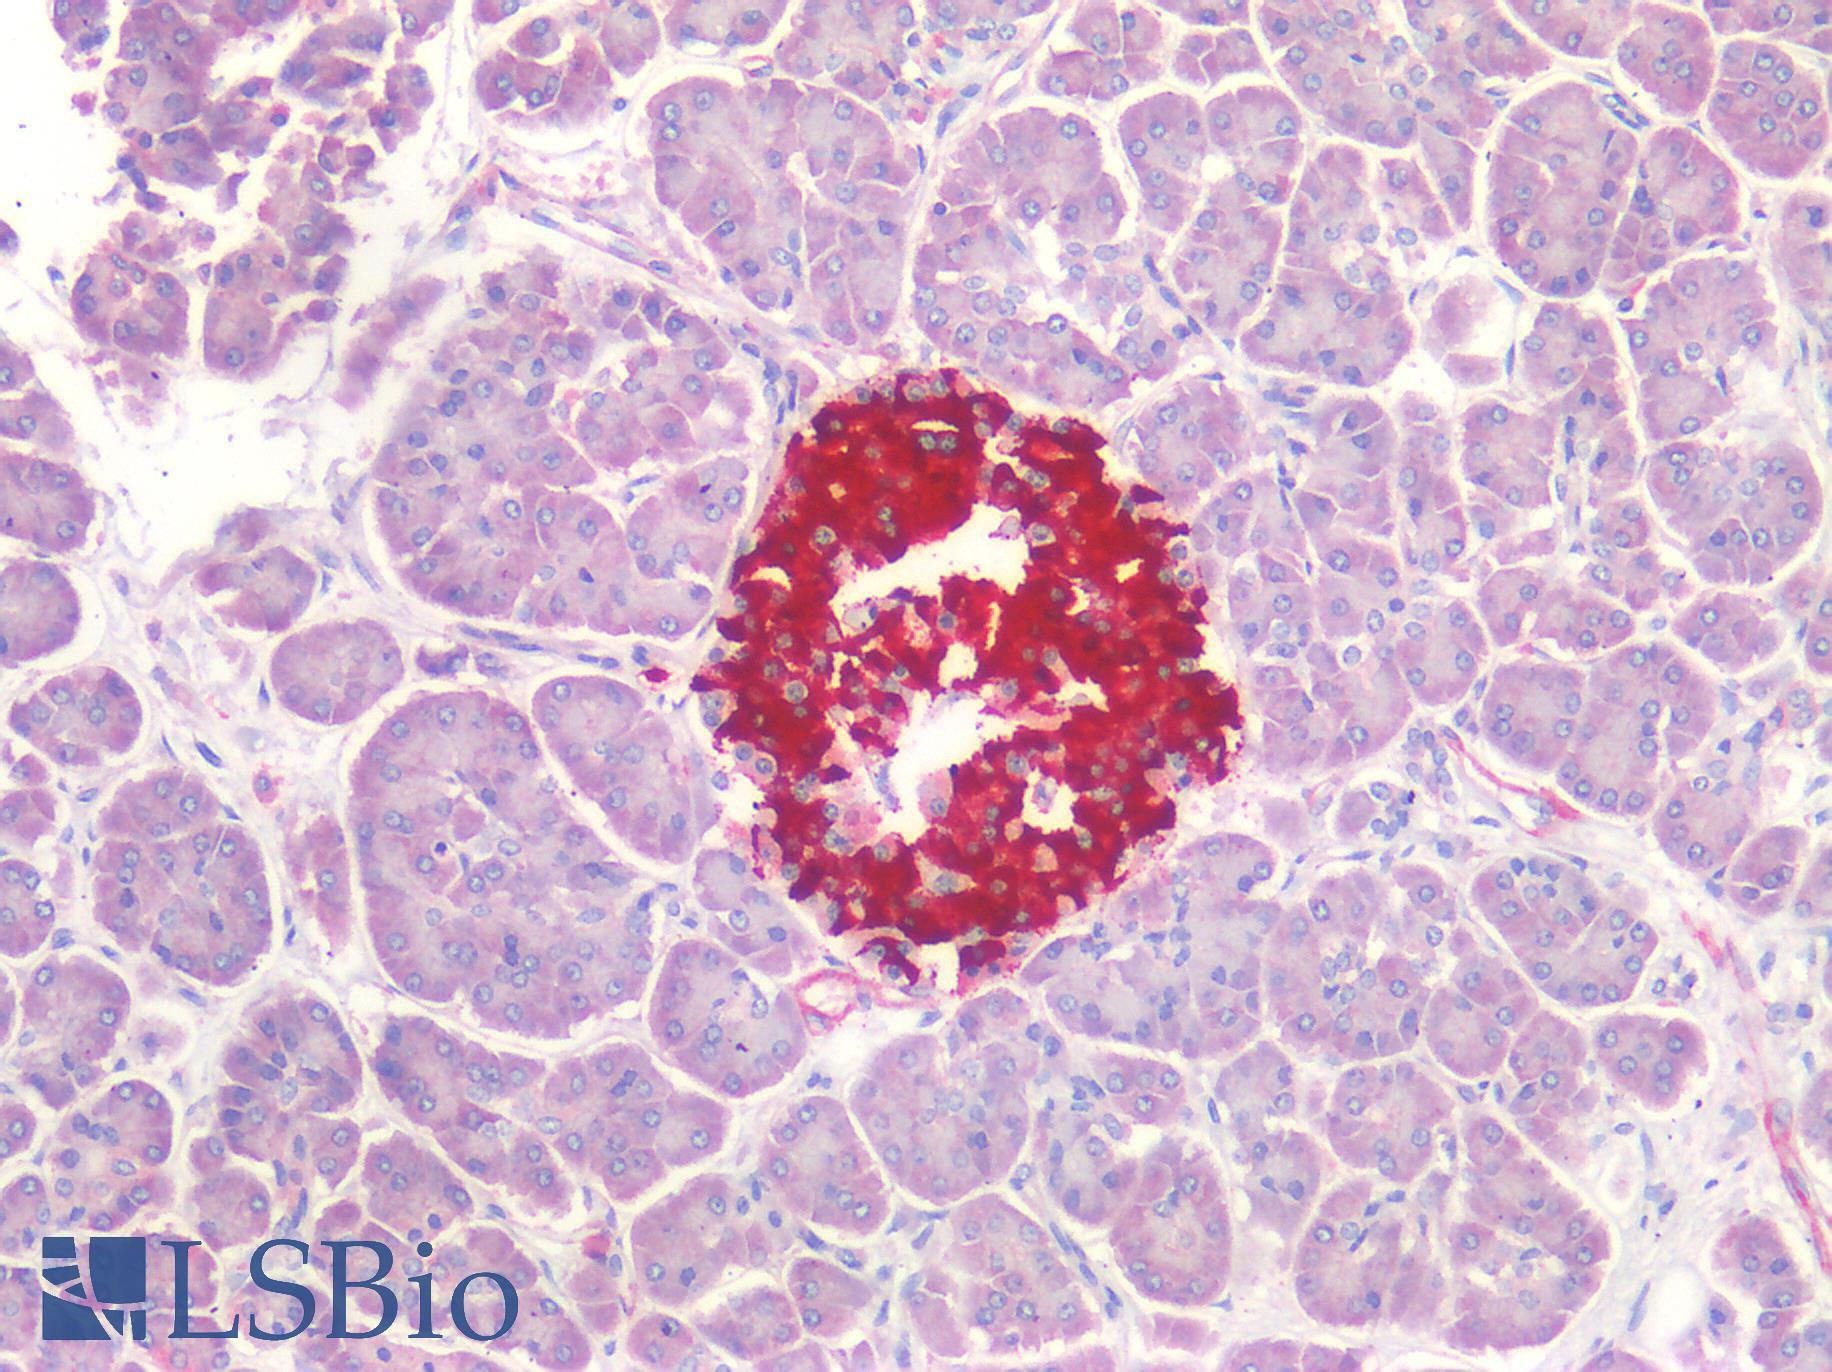 OCLN / Occludin Antibody - Human Pancreas: Formalin-Fixed, Paraffin-Embedded (FFPE)